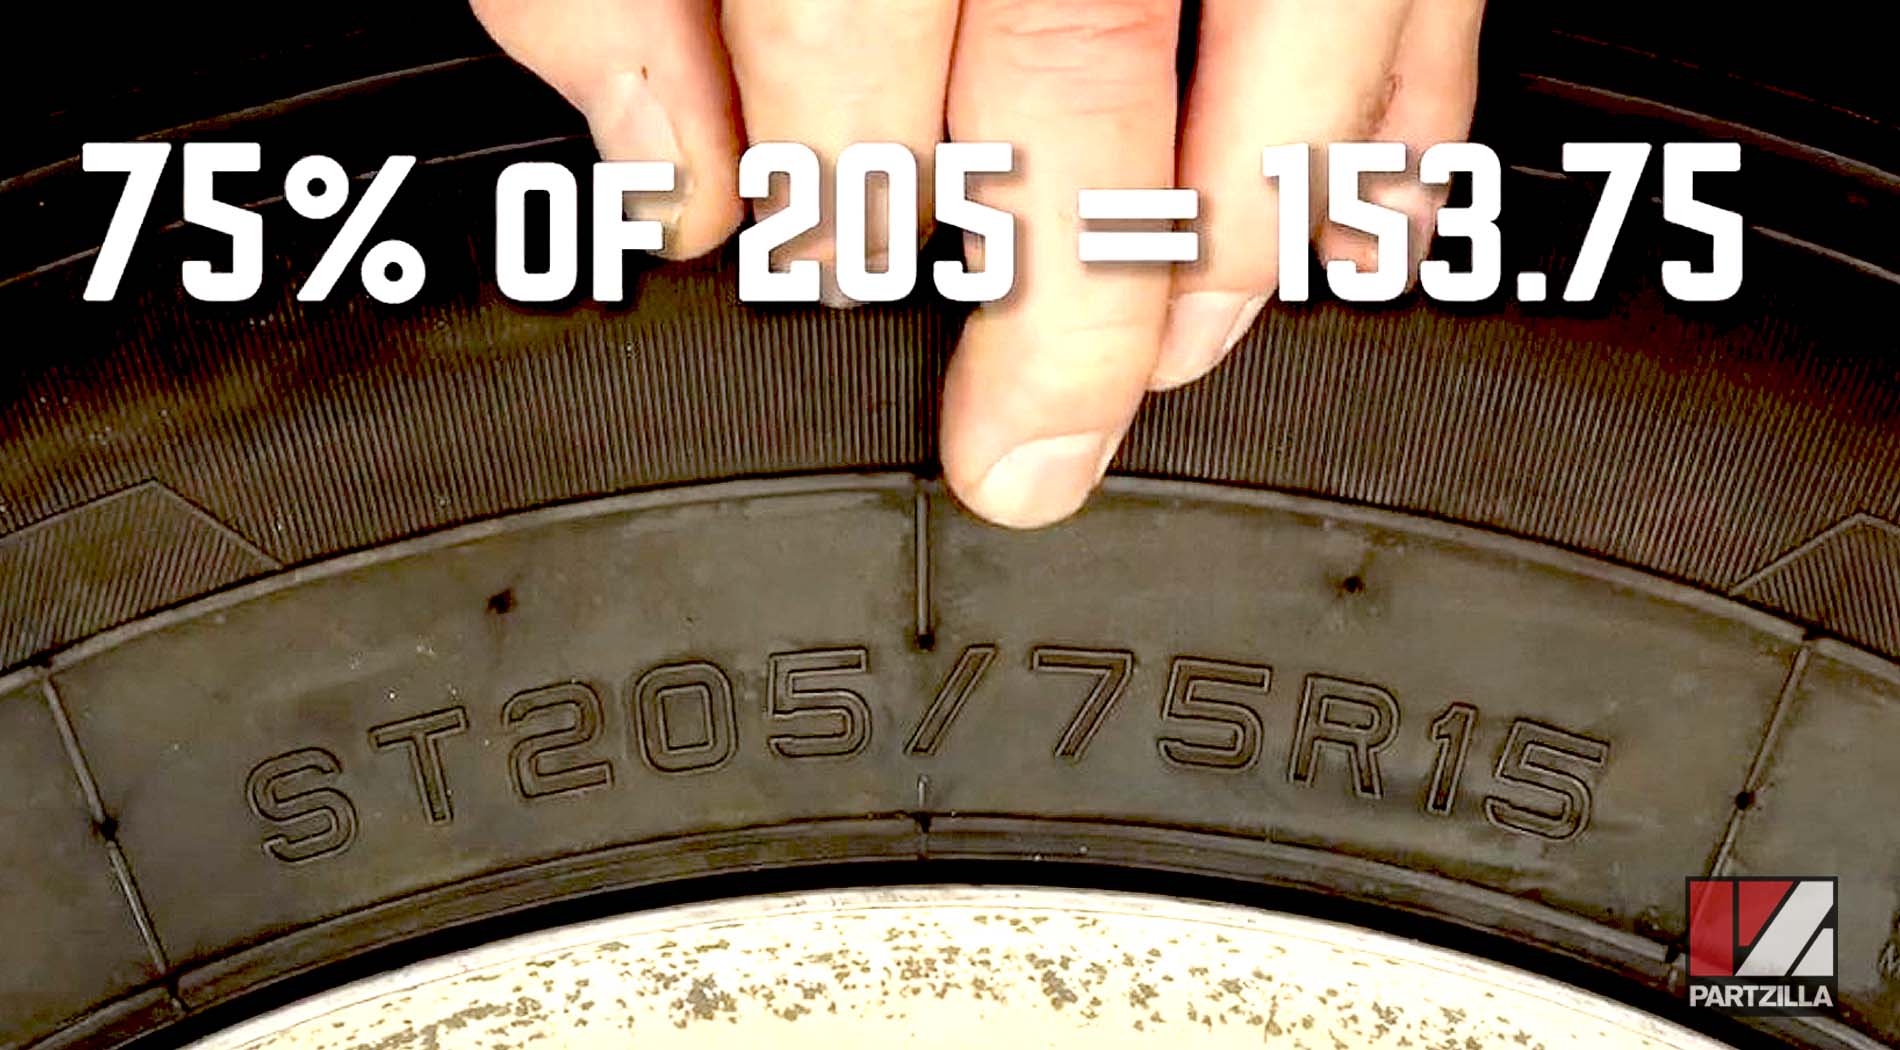 Metric size tire percentage measurement